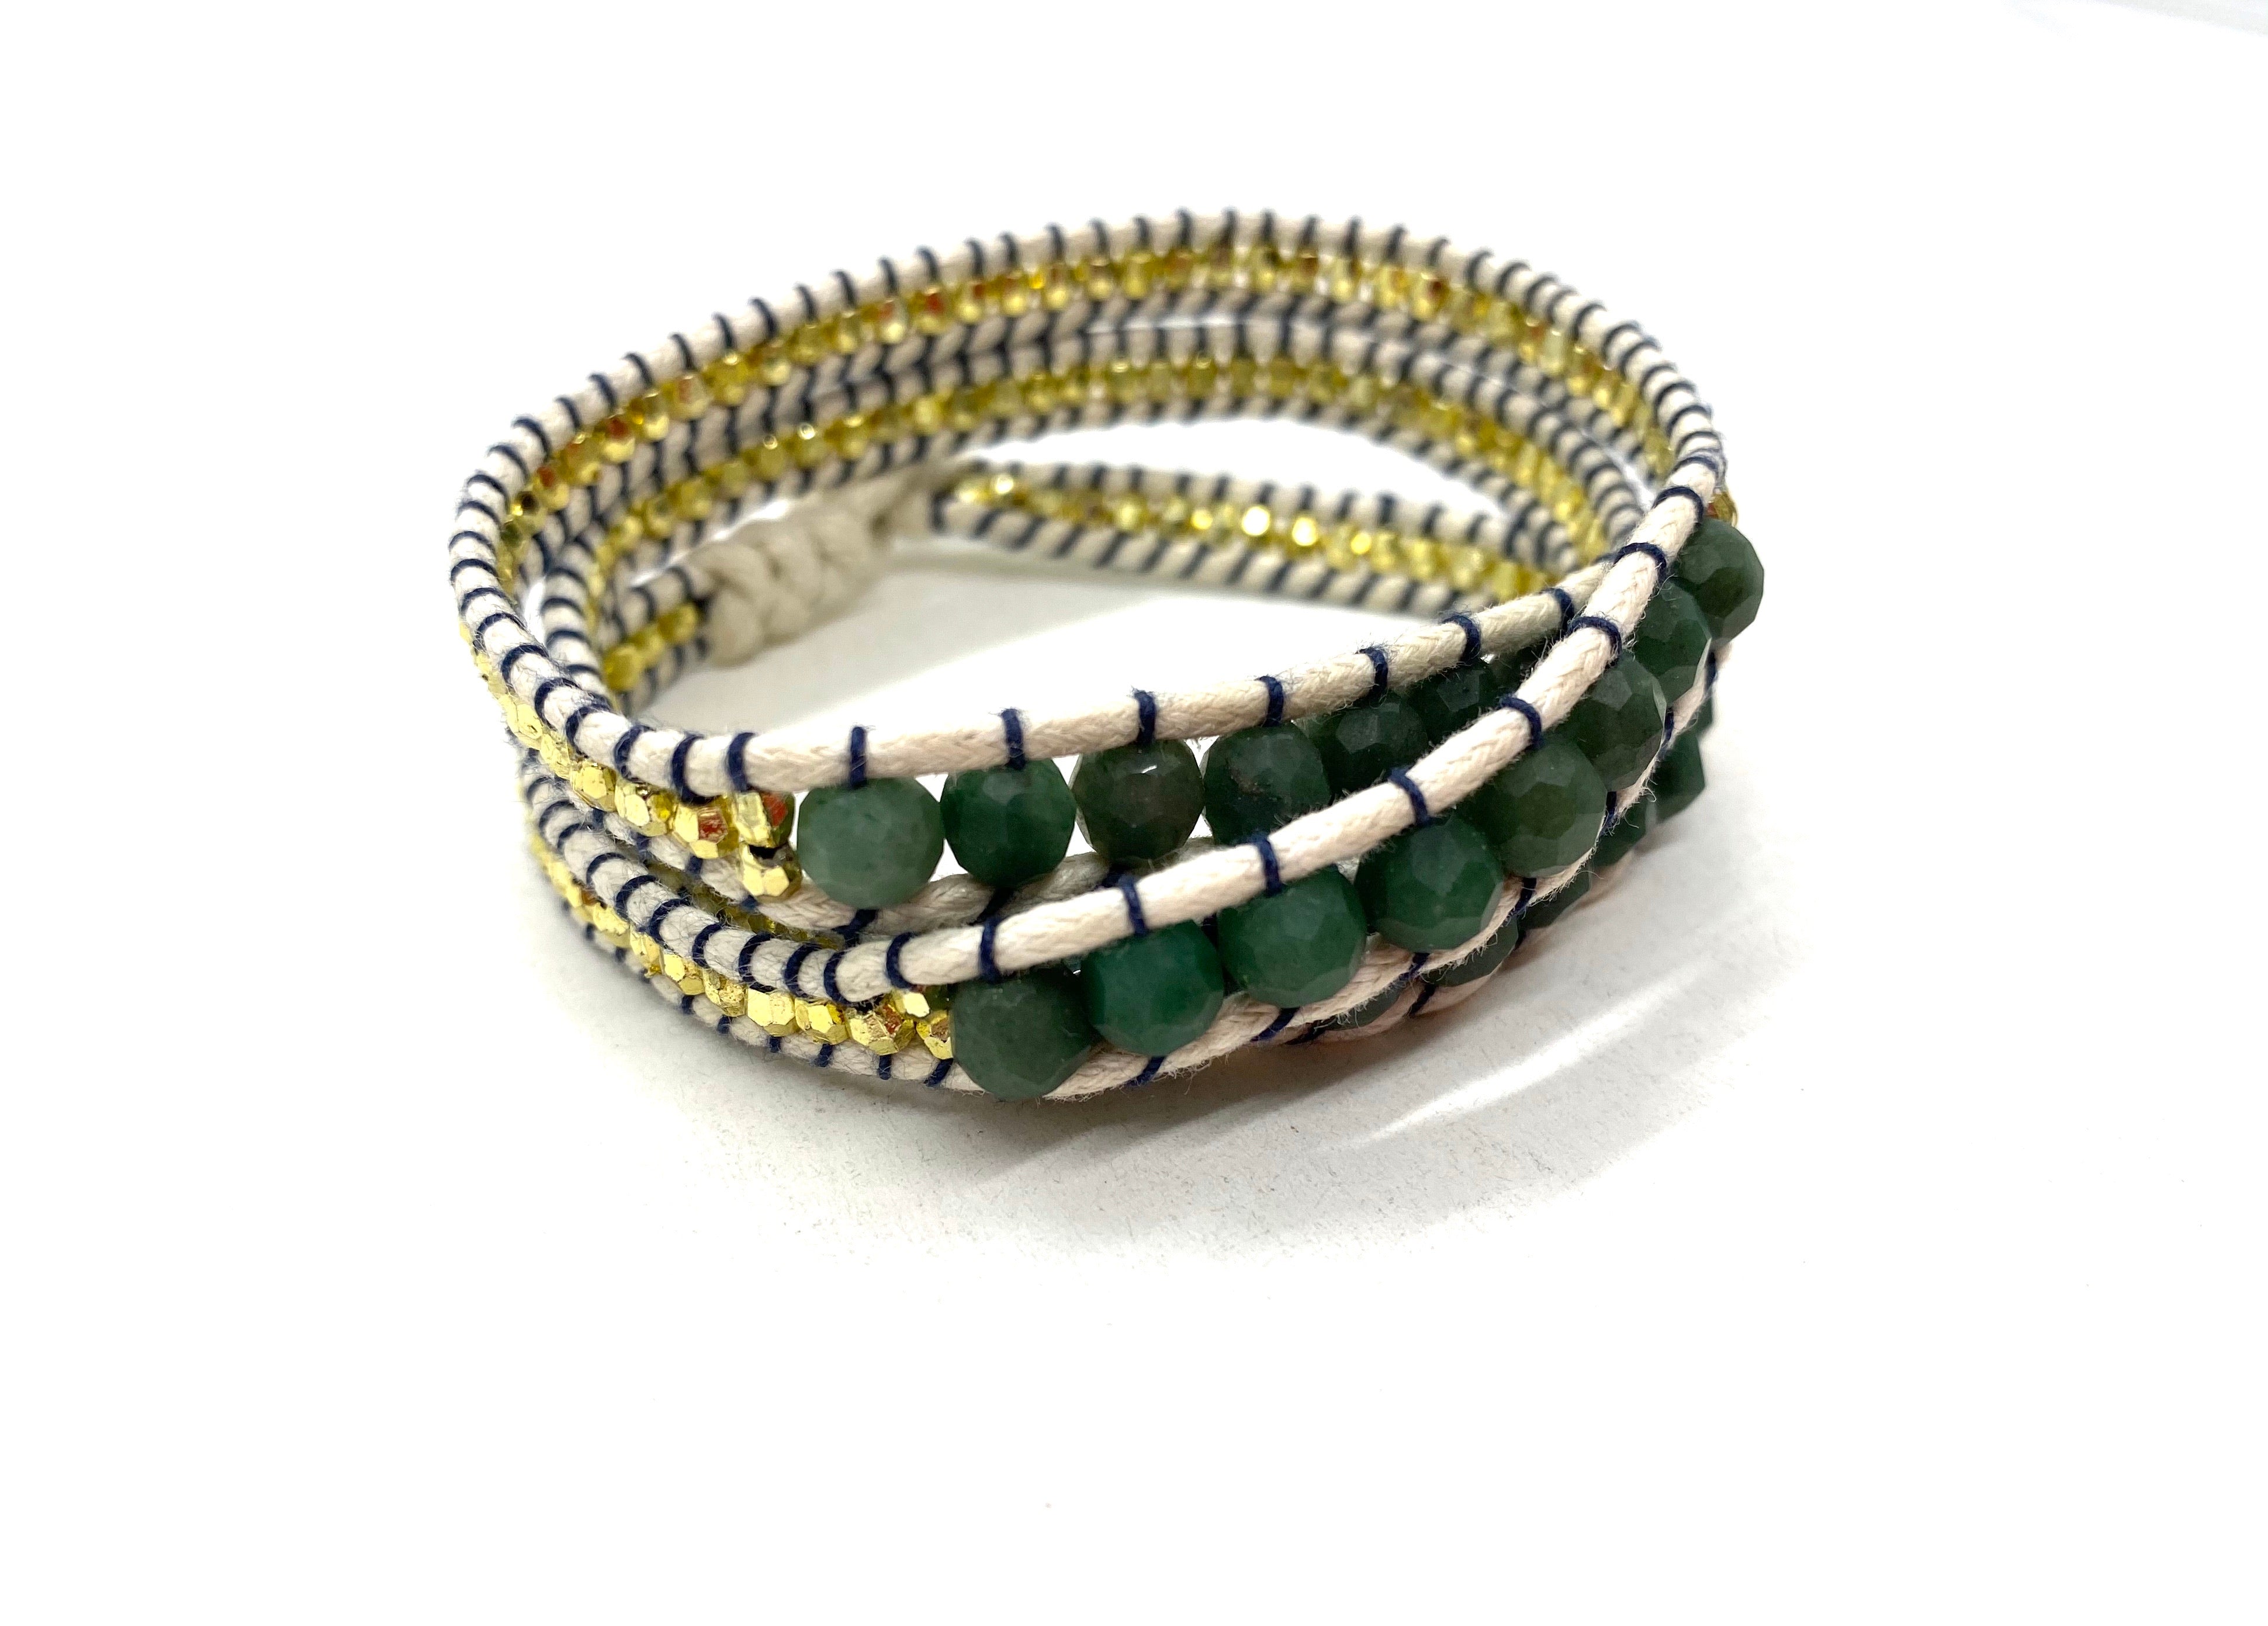 Wraparound Matt green stone bracelet, beige cord gold resin side bead on black thread